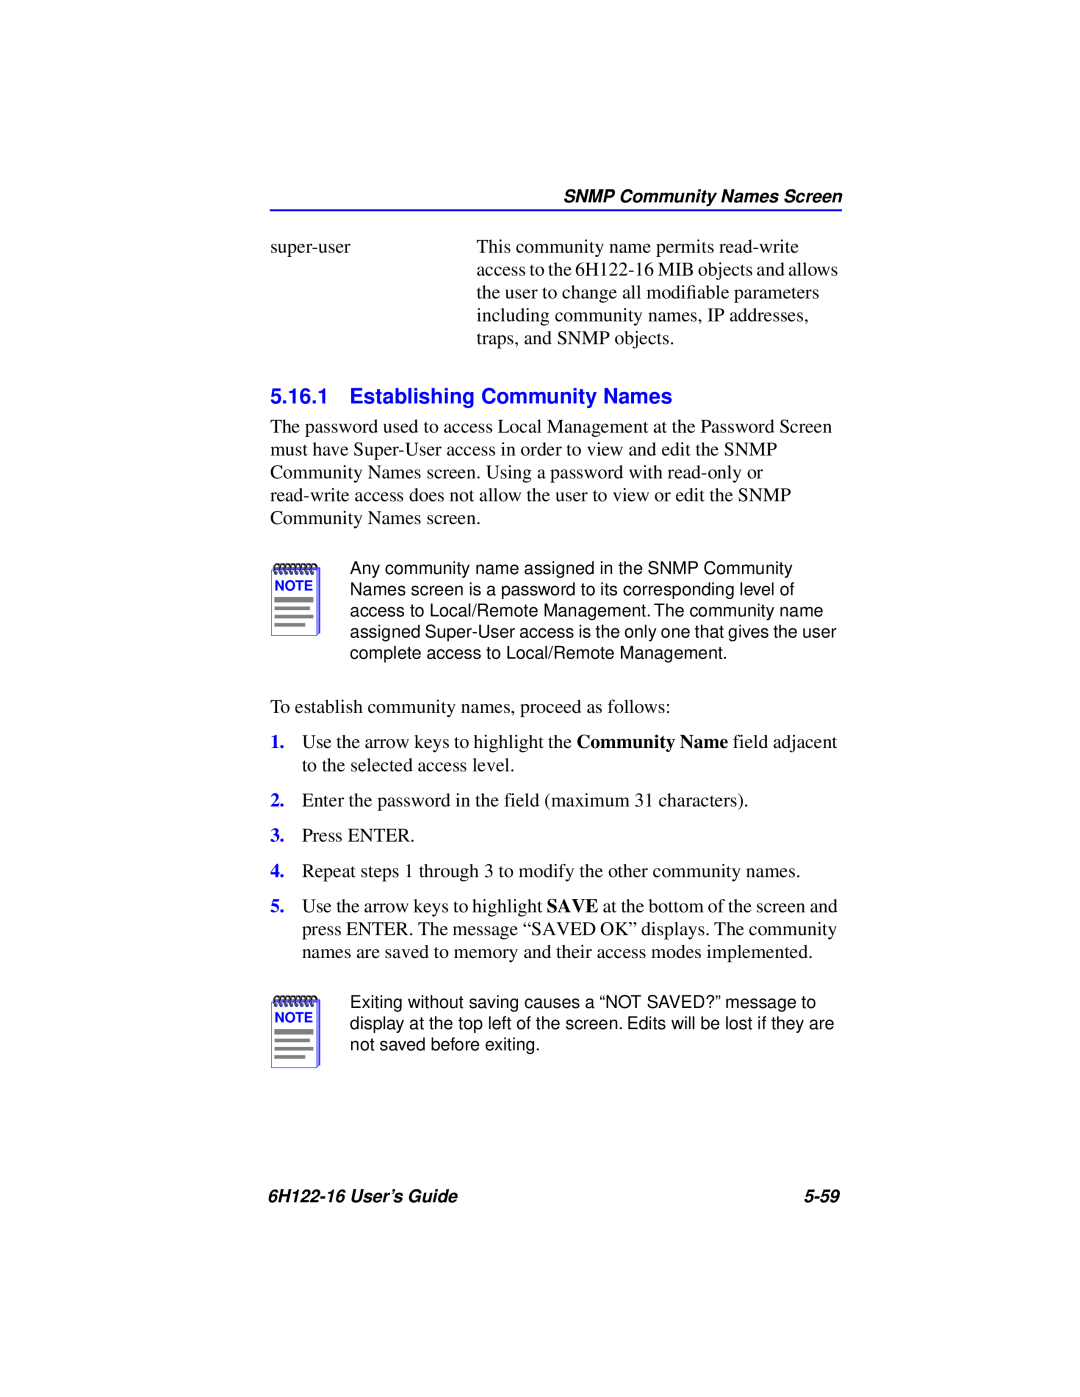 Cabletron Systems 6H122-16 manual Establishing Community Names 